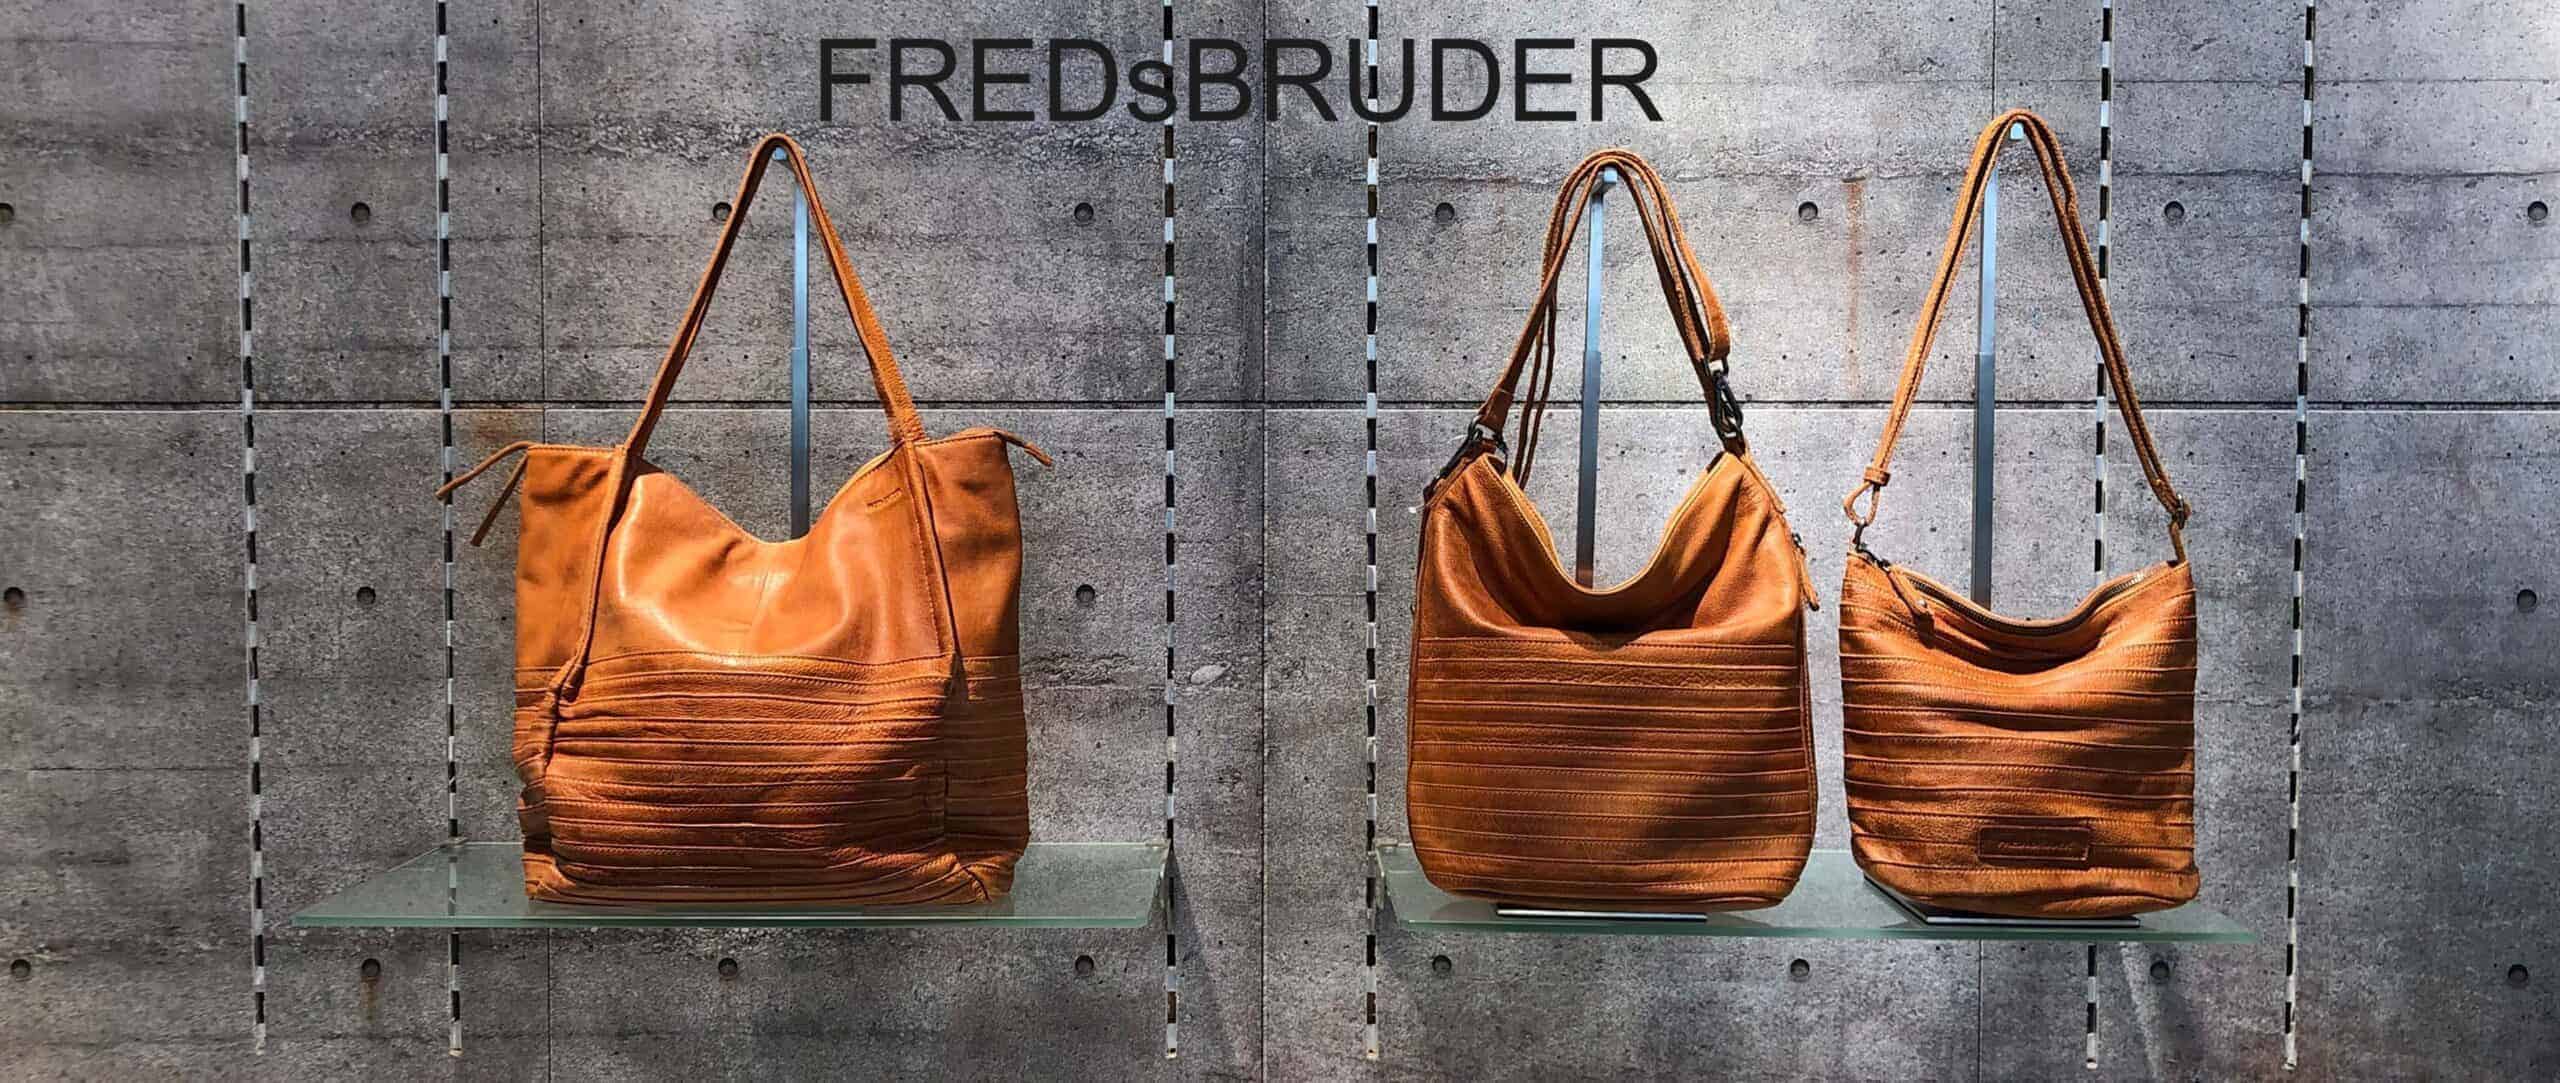 Fuchs FredsBruder Leder -